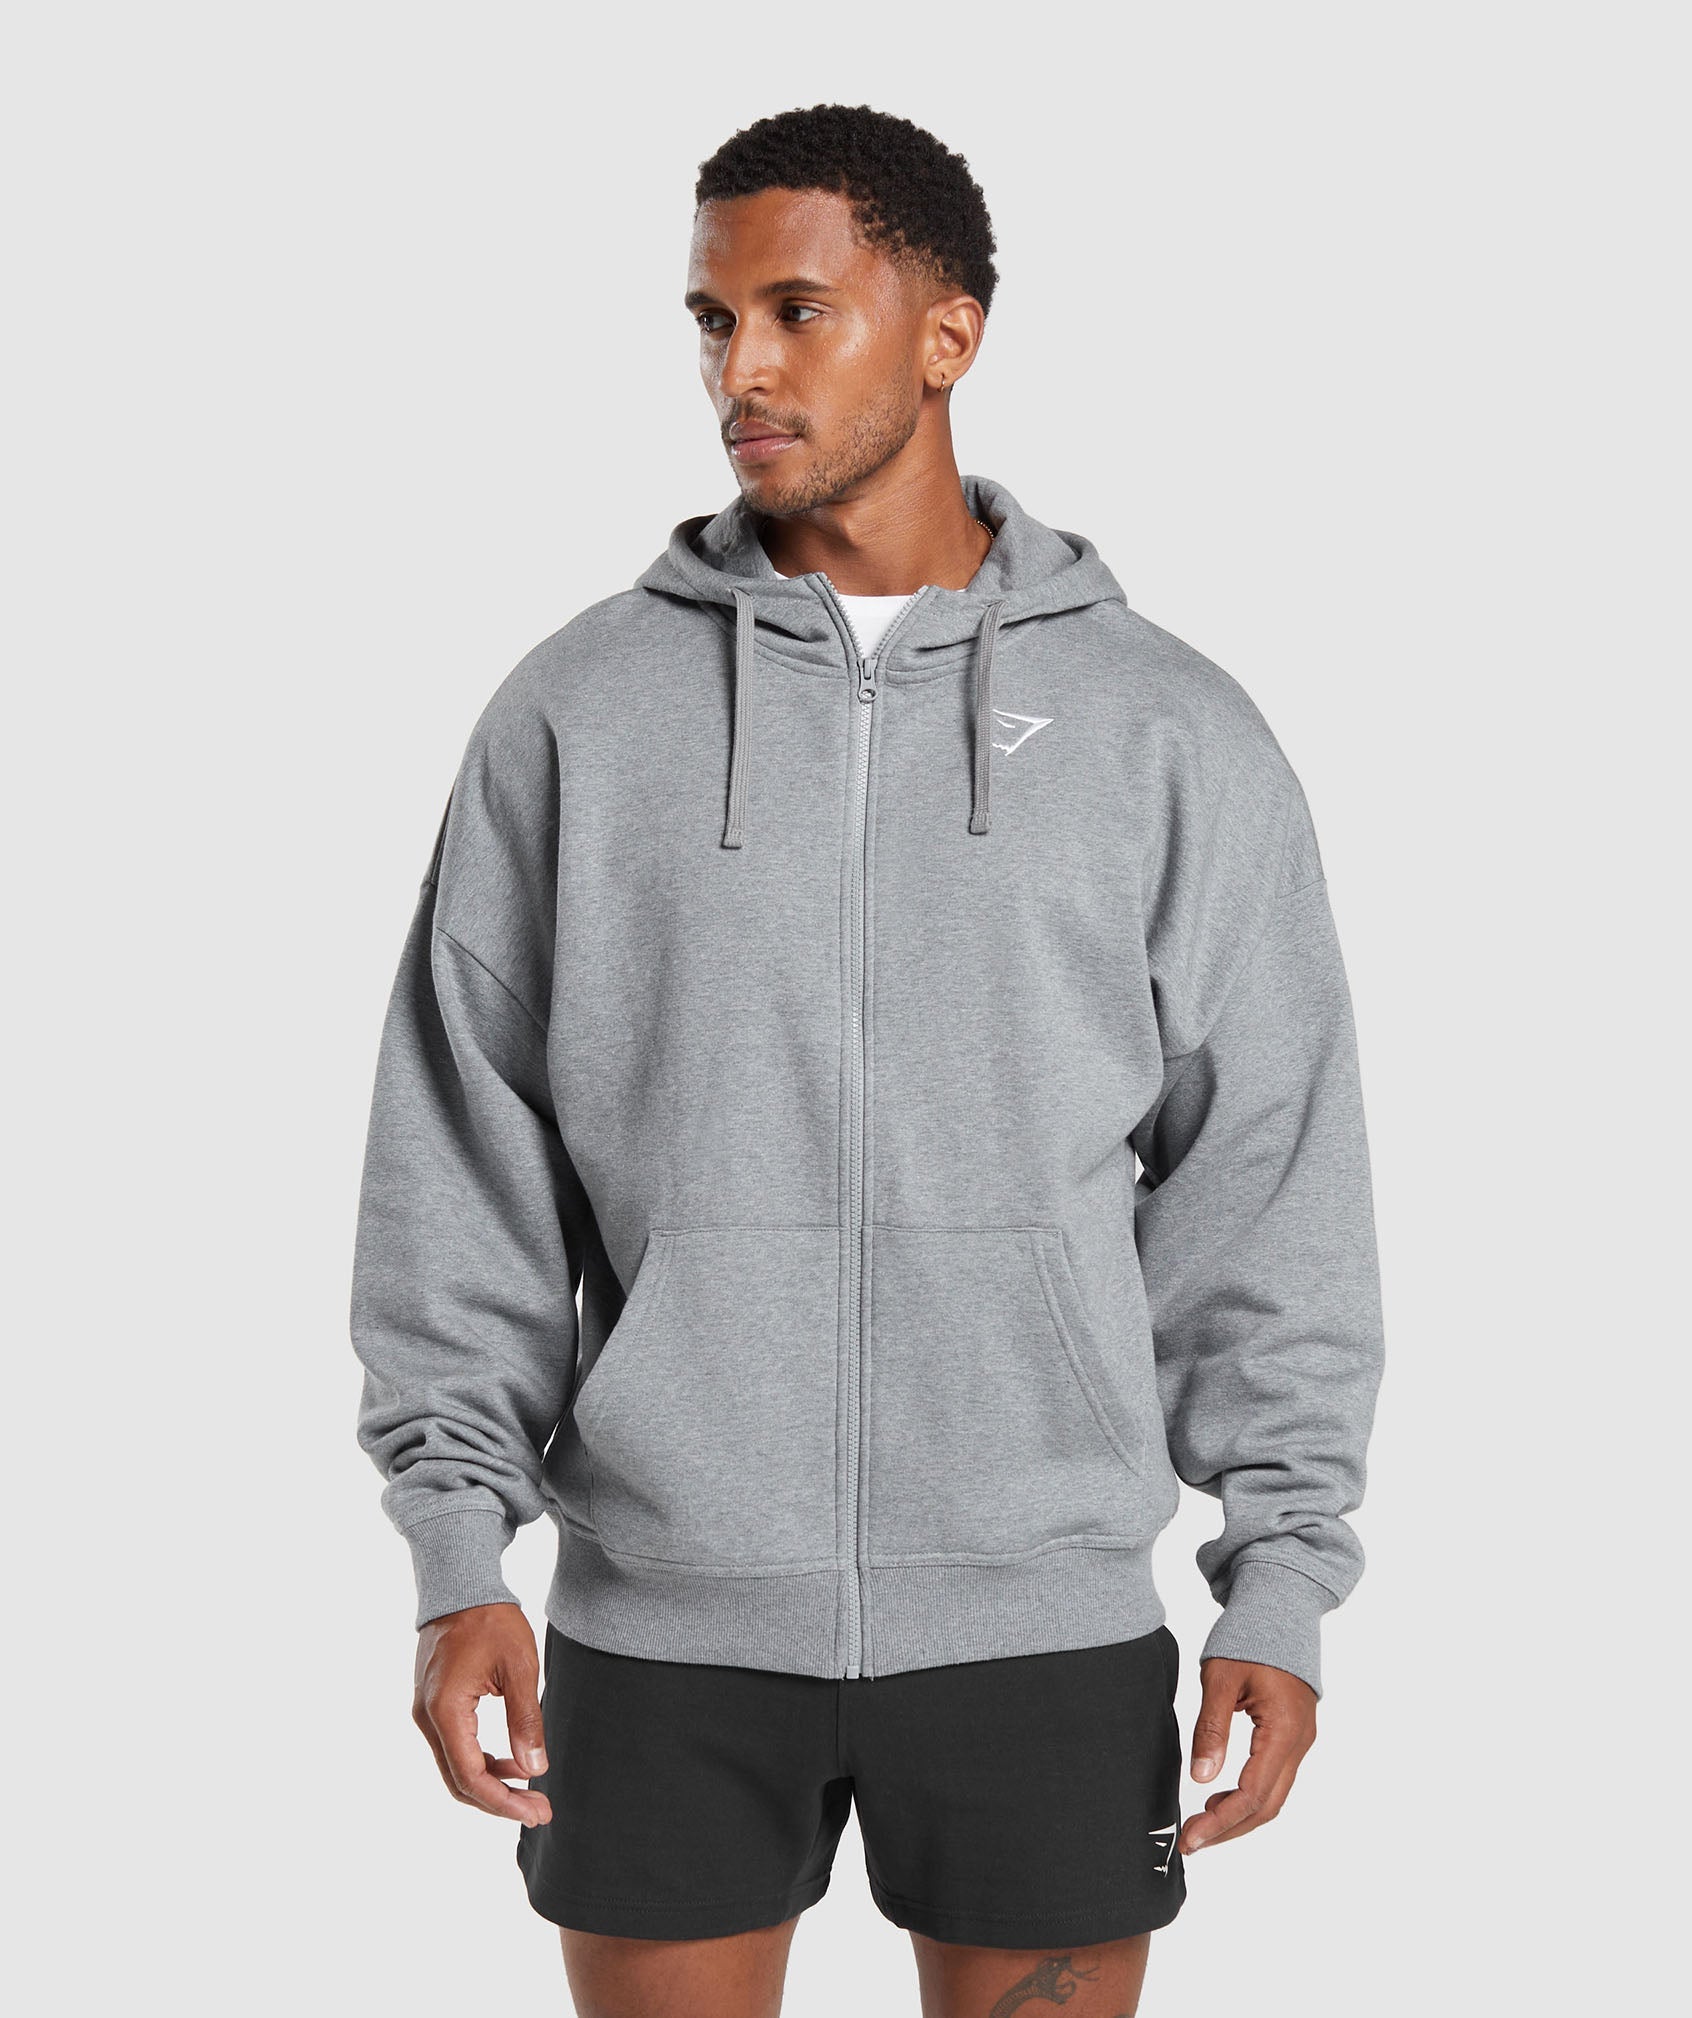 gymshark hoodie grey size L large sweatshirt top front pocket hood spellout